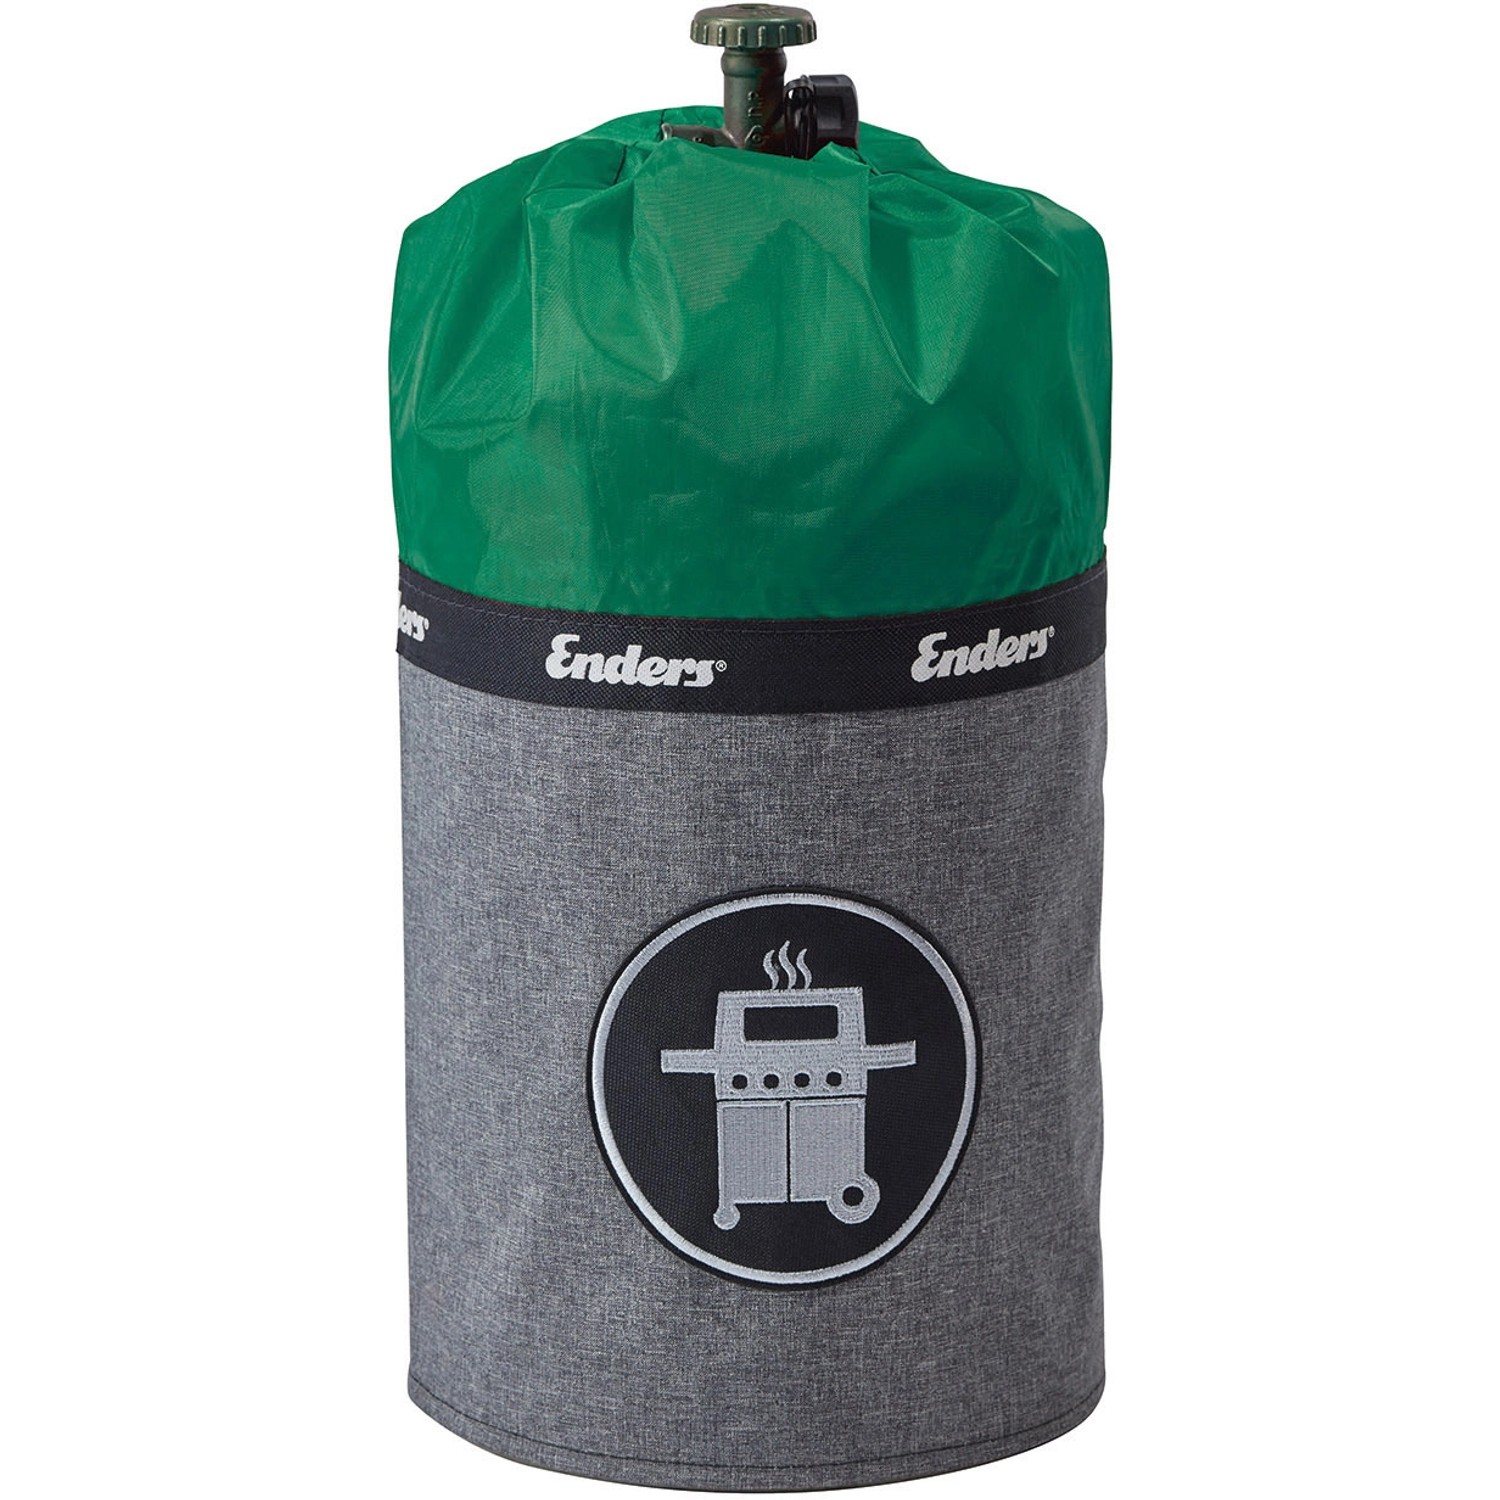 Enders® Gasflaschenhülle 5 kg Style Green von Enders